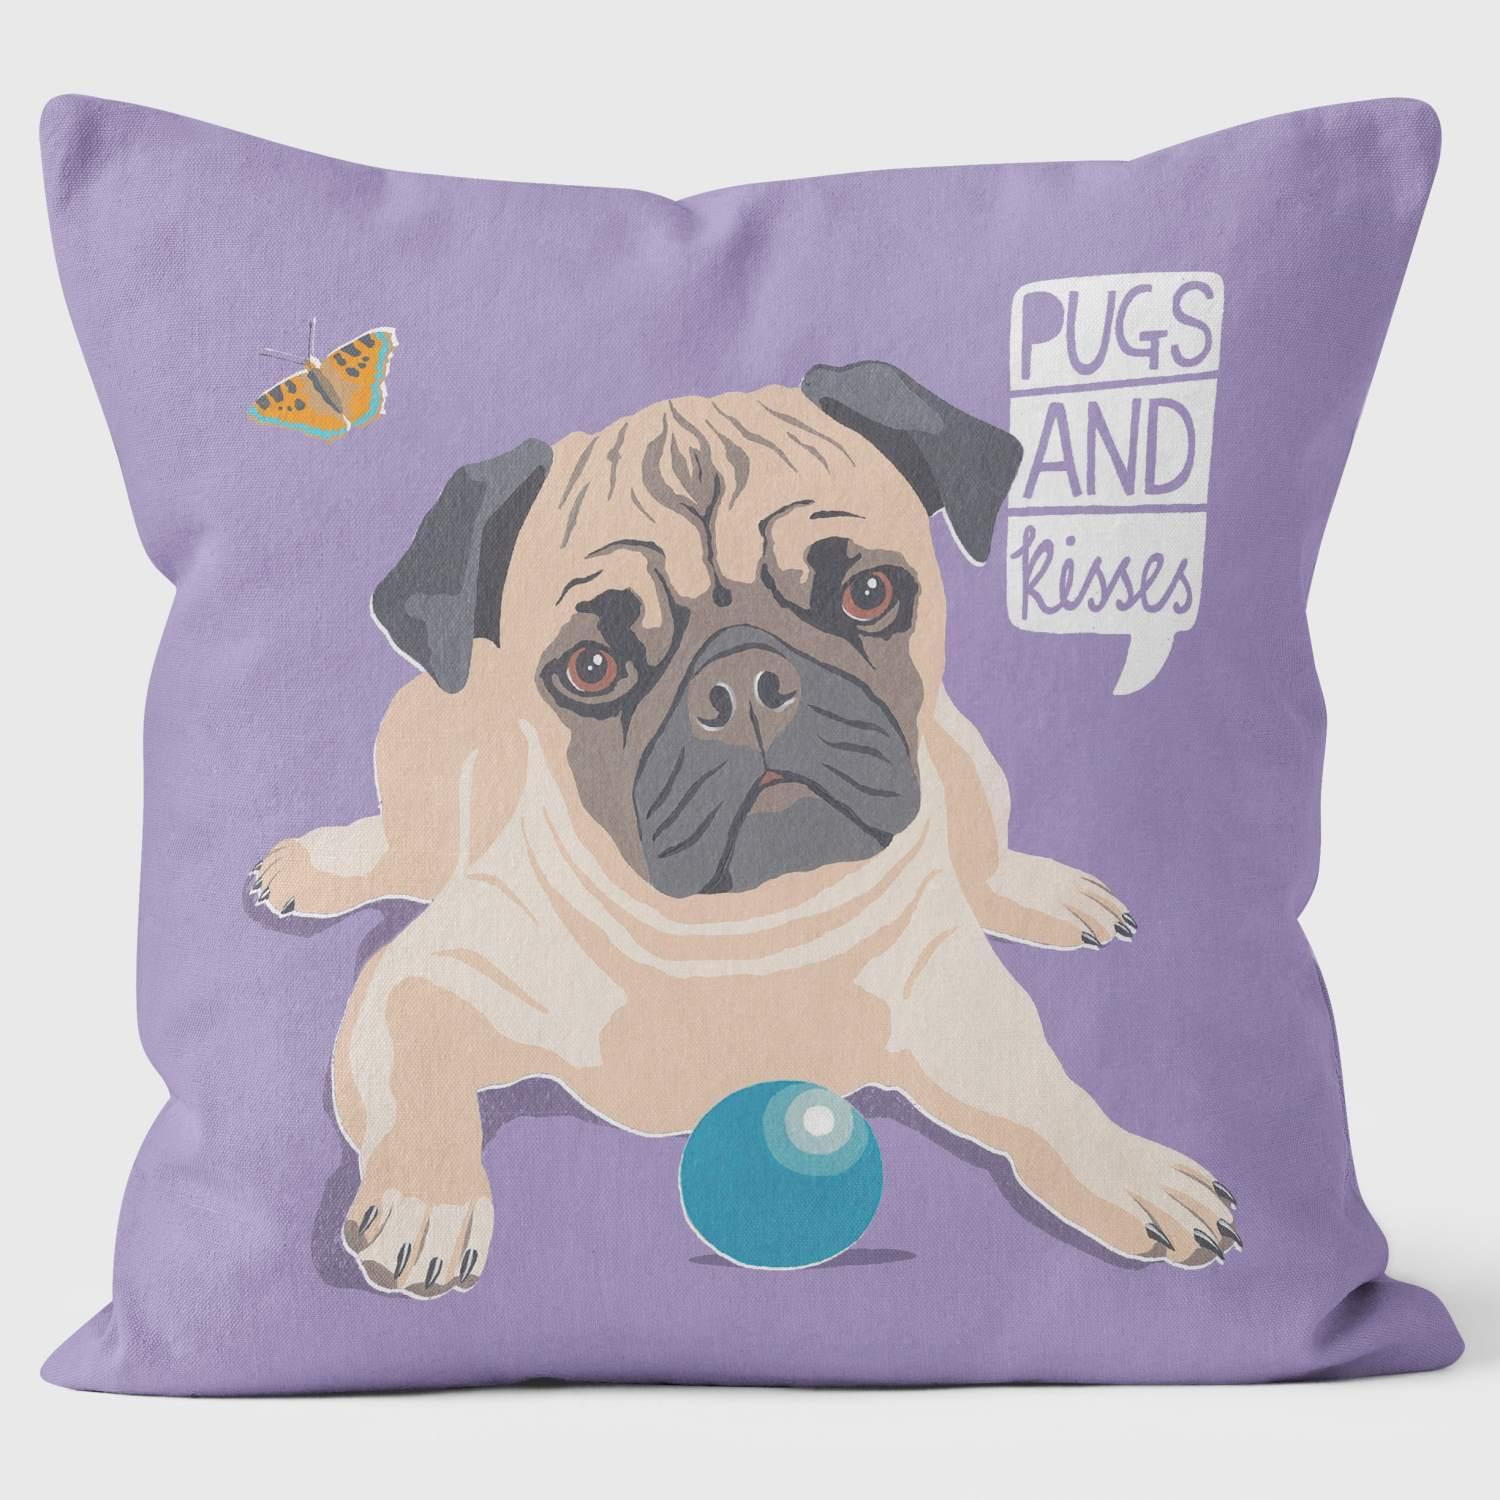 Pugs and Kisses - Paperlollipop Cushion - Handmade Cushions UK - WeLoveCushions